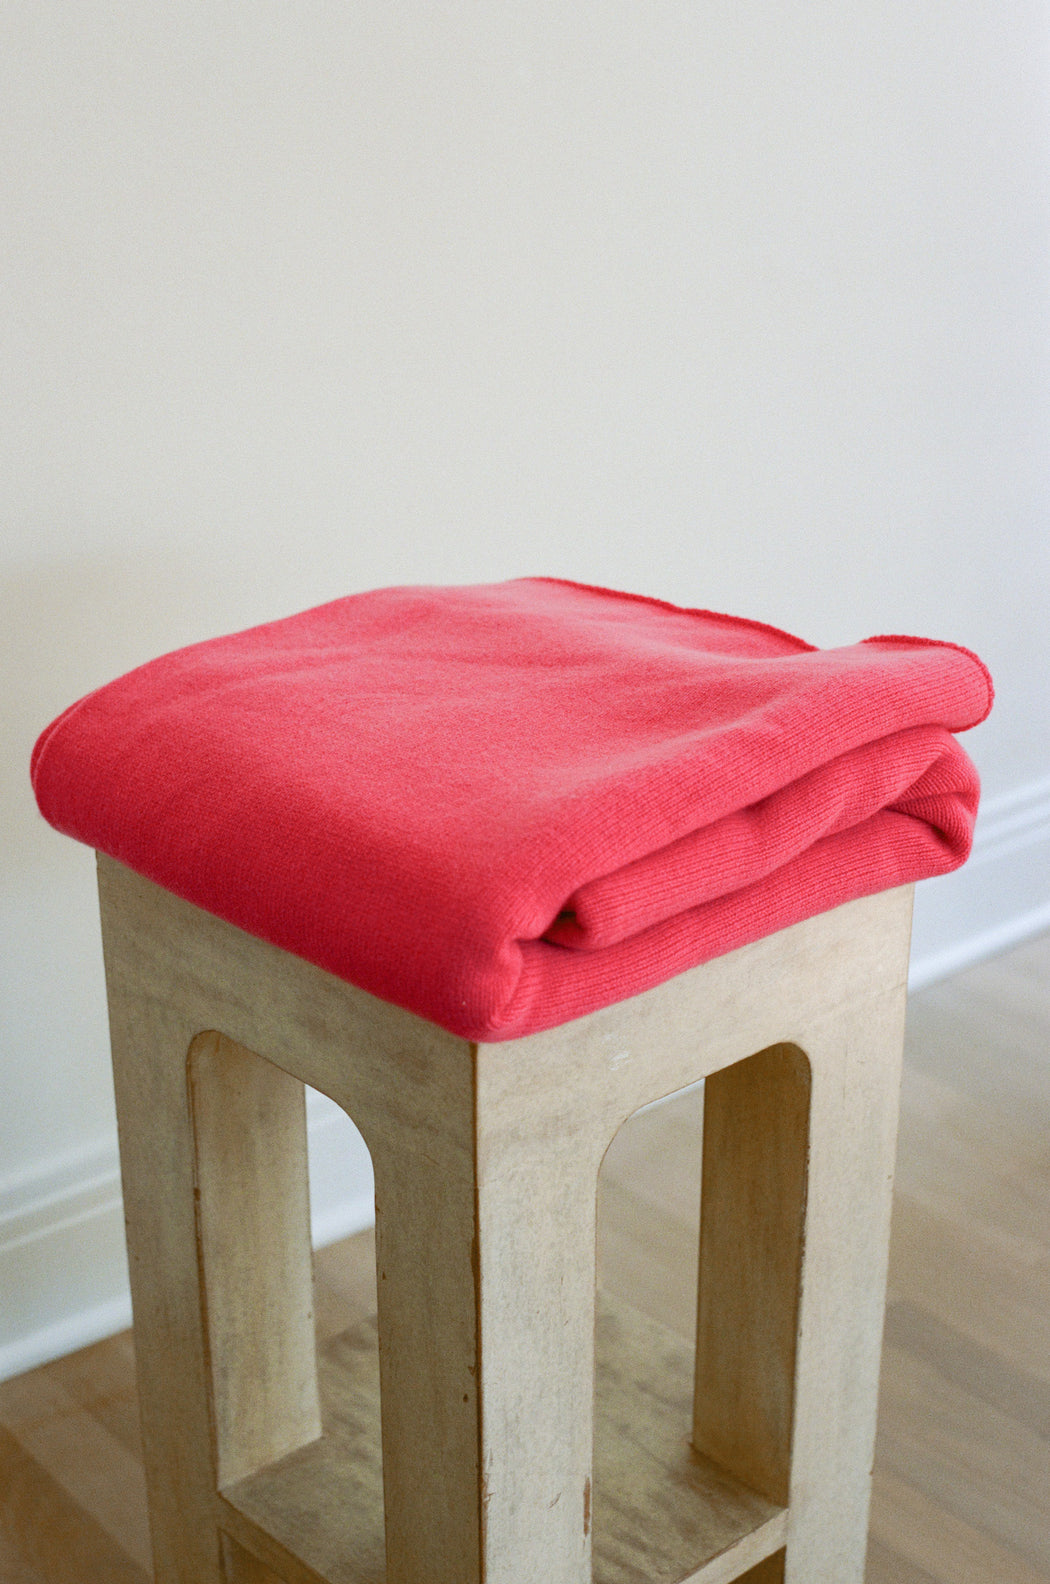 Oversized Italian Cashmere Jersey Knit Blanket - Camelia